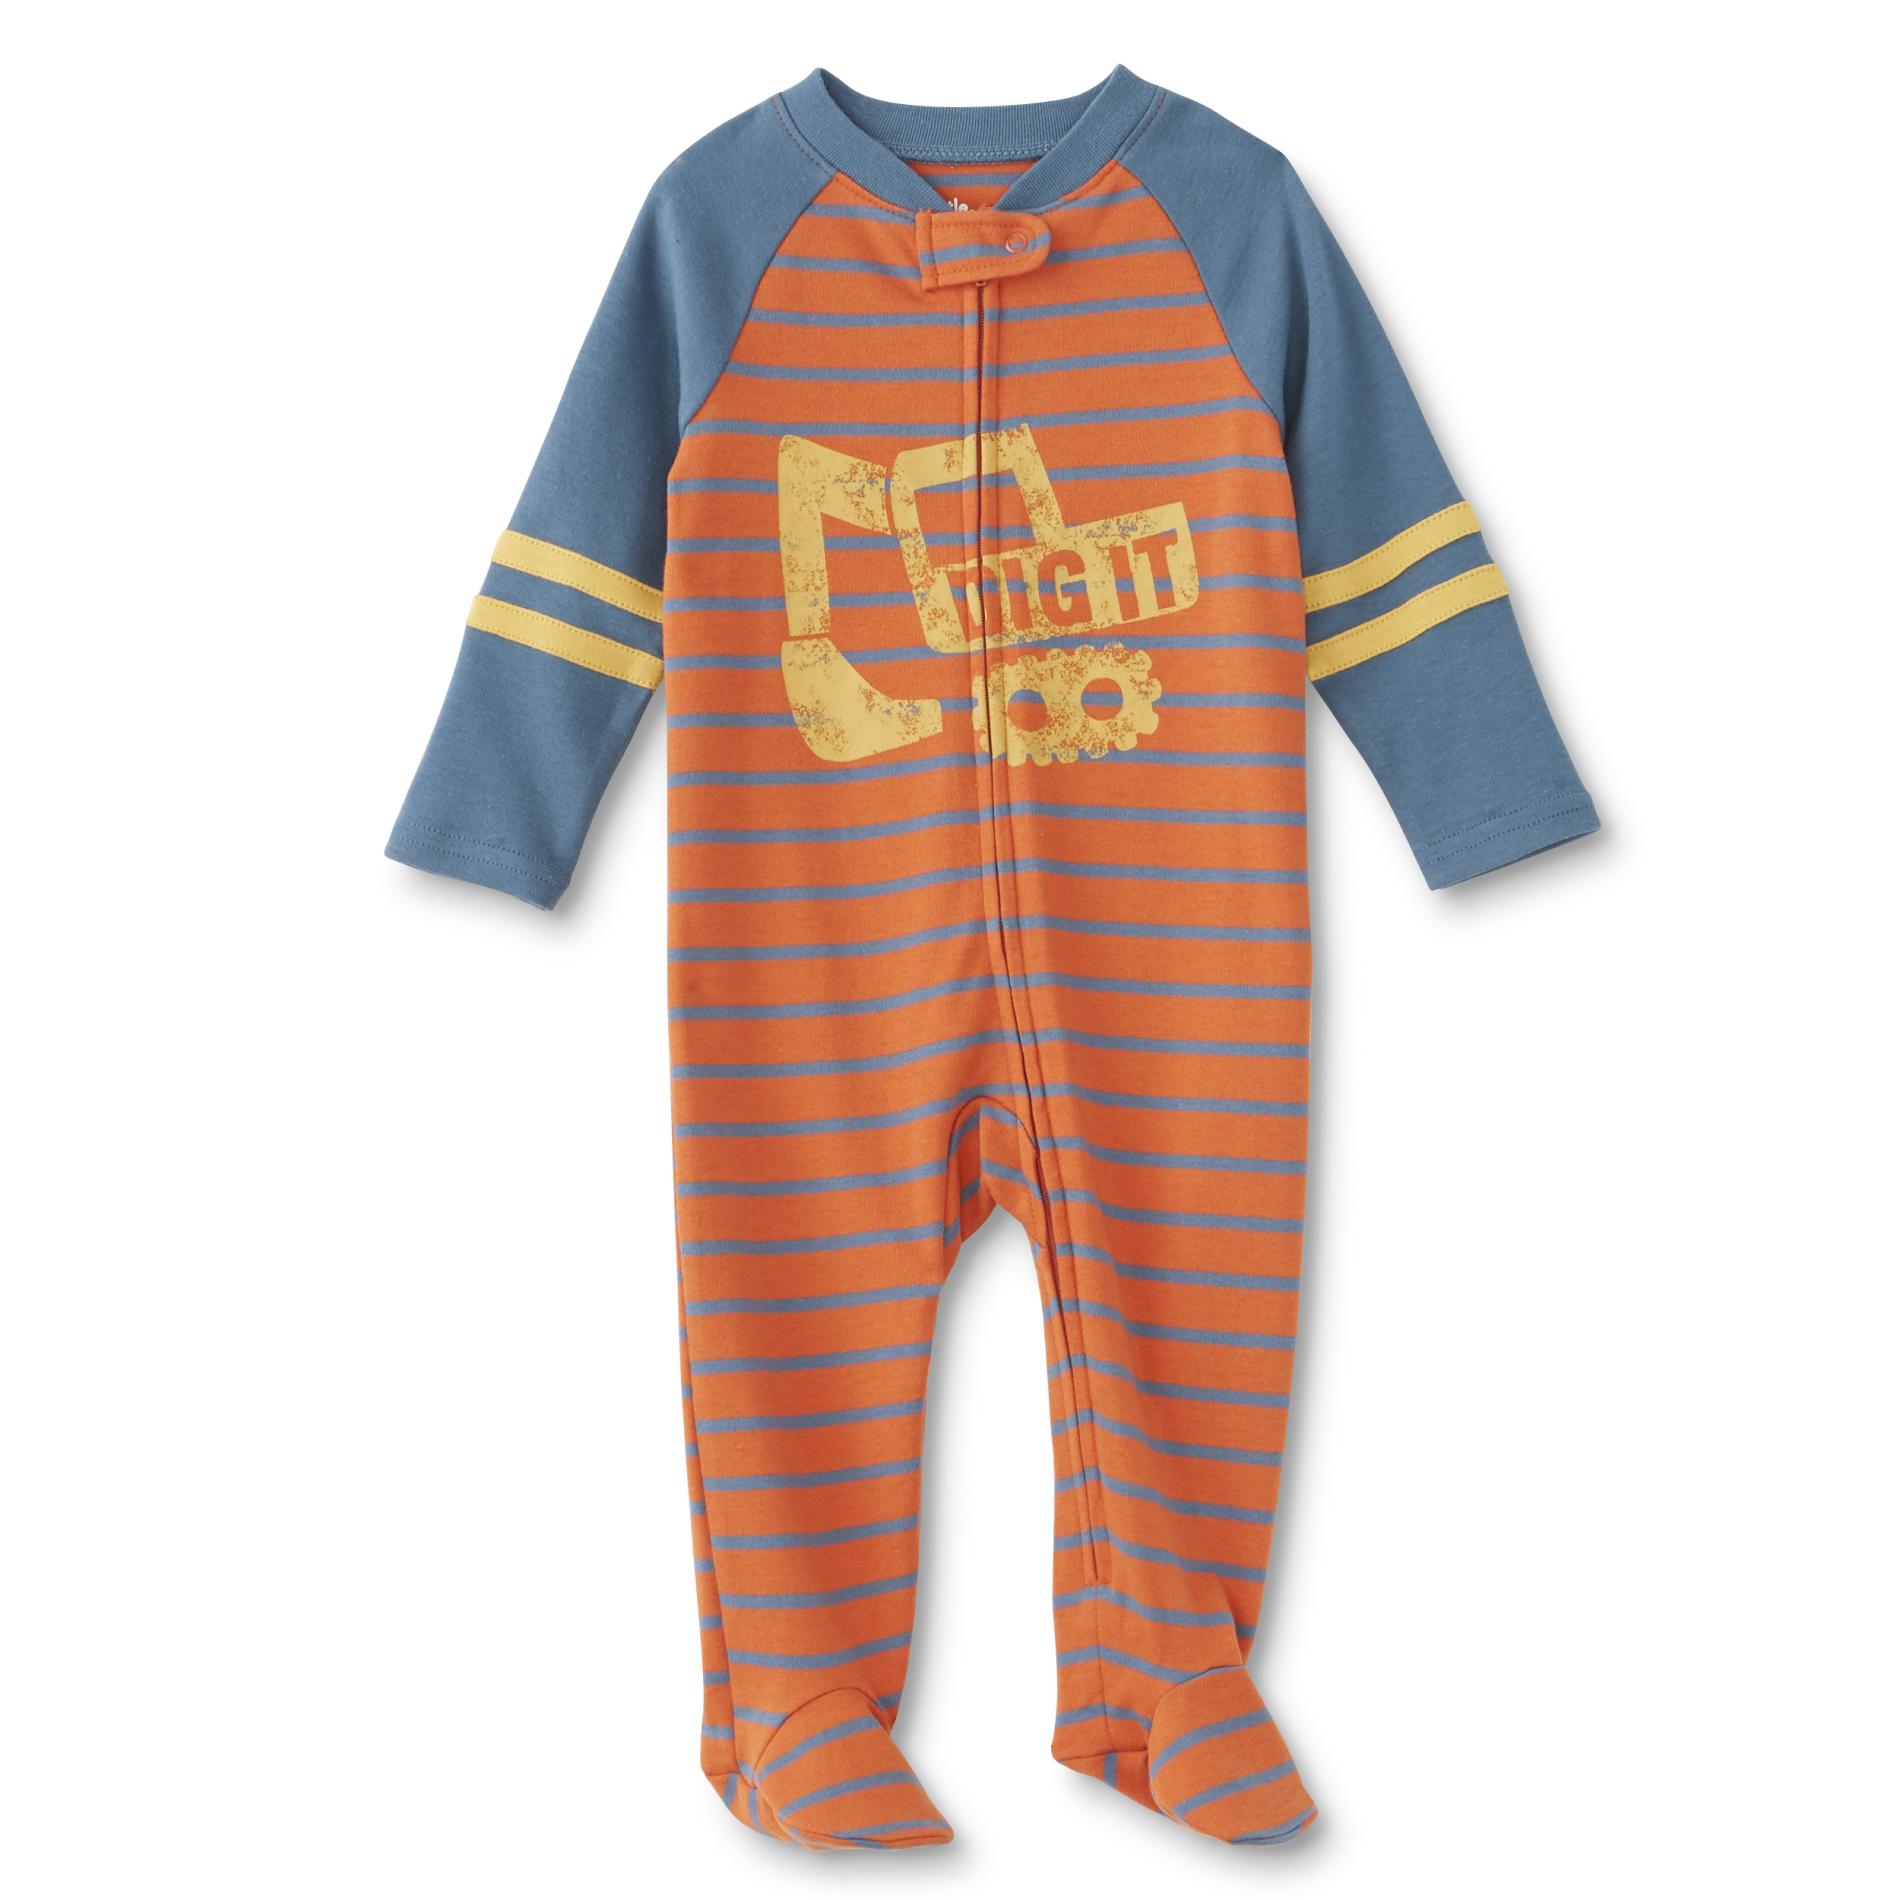 Little Wonders Newborn Boy's Sleeper Pajamas - Dig It